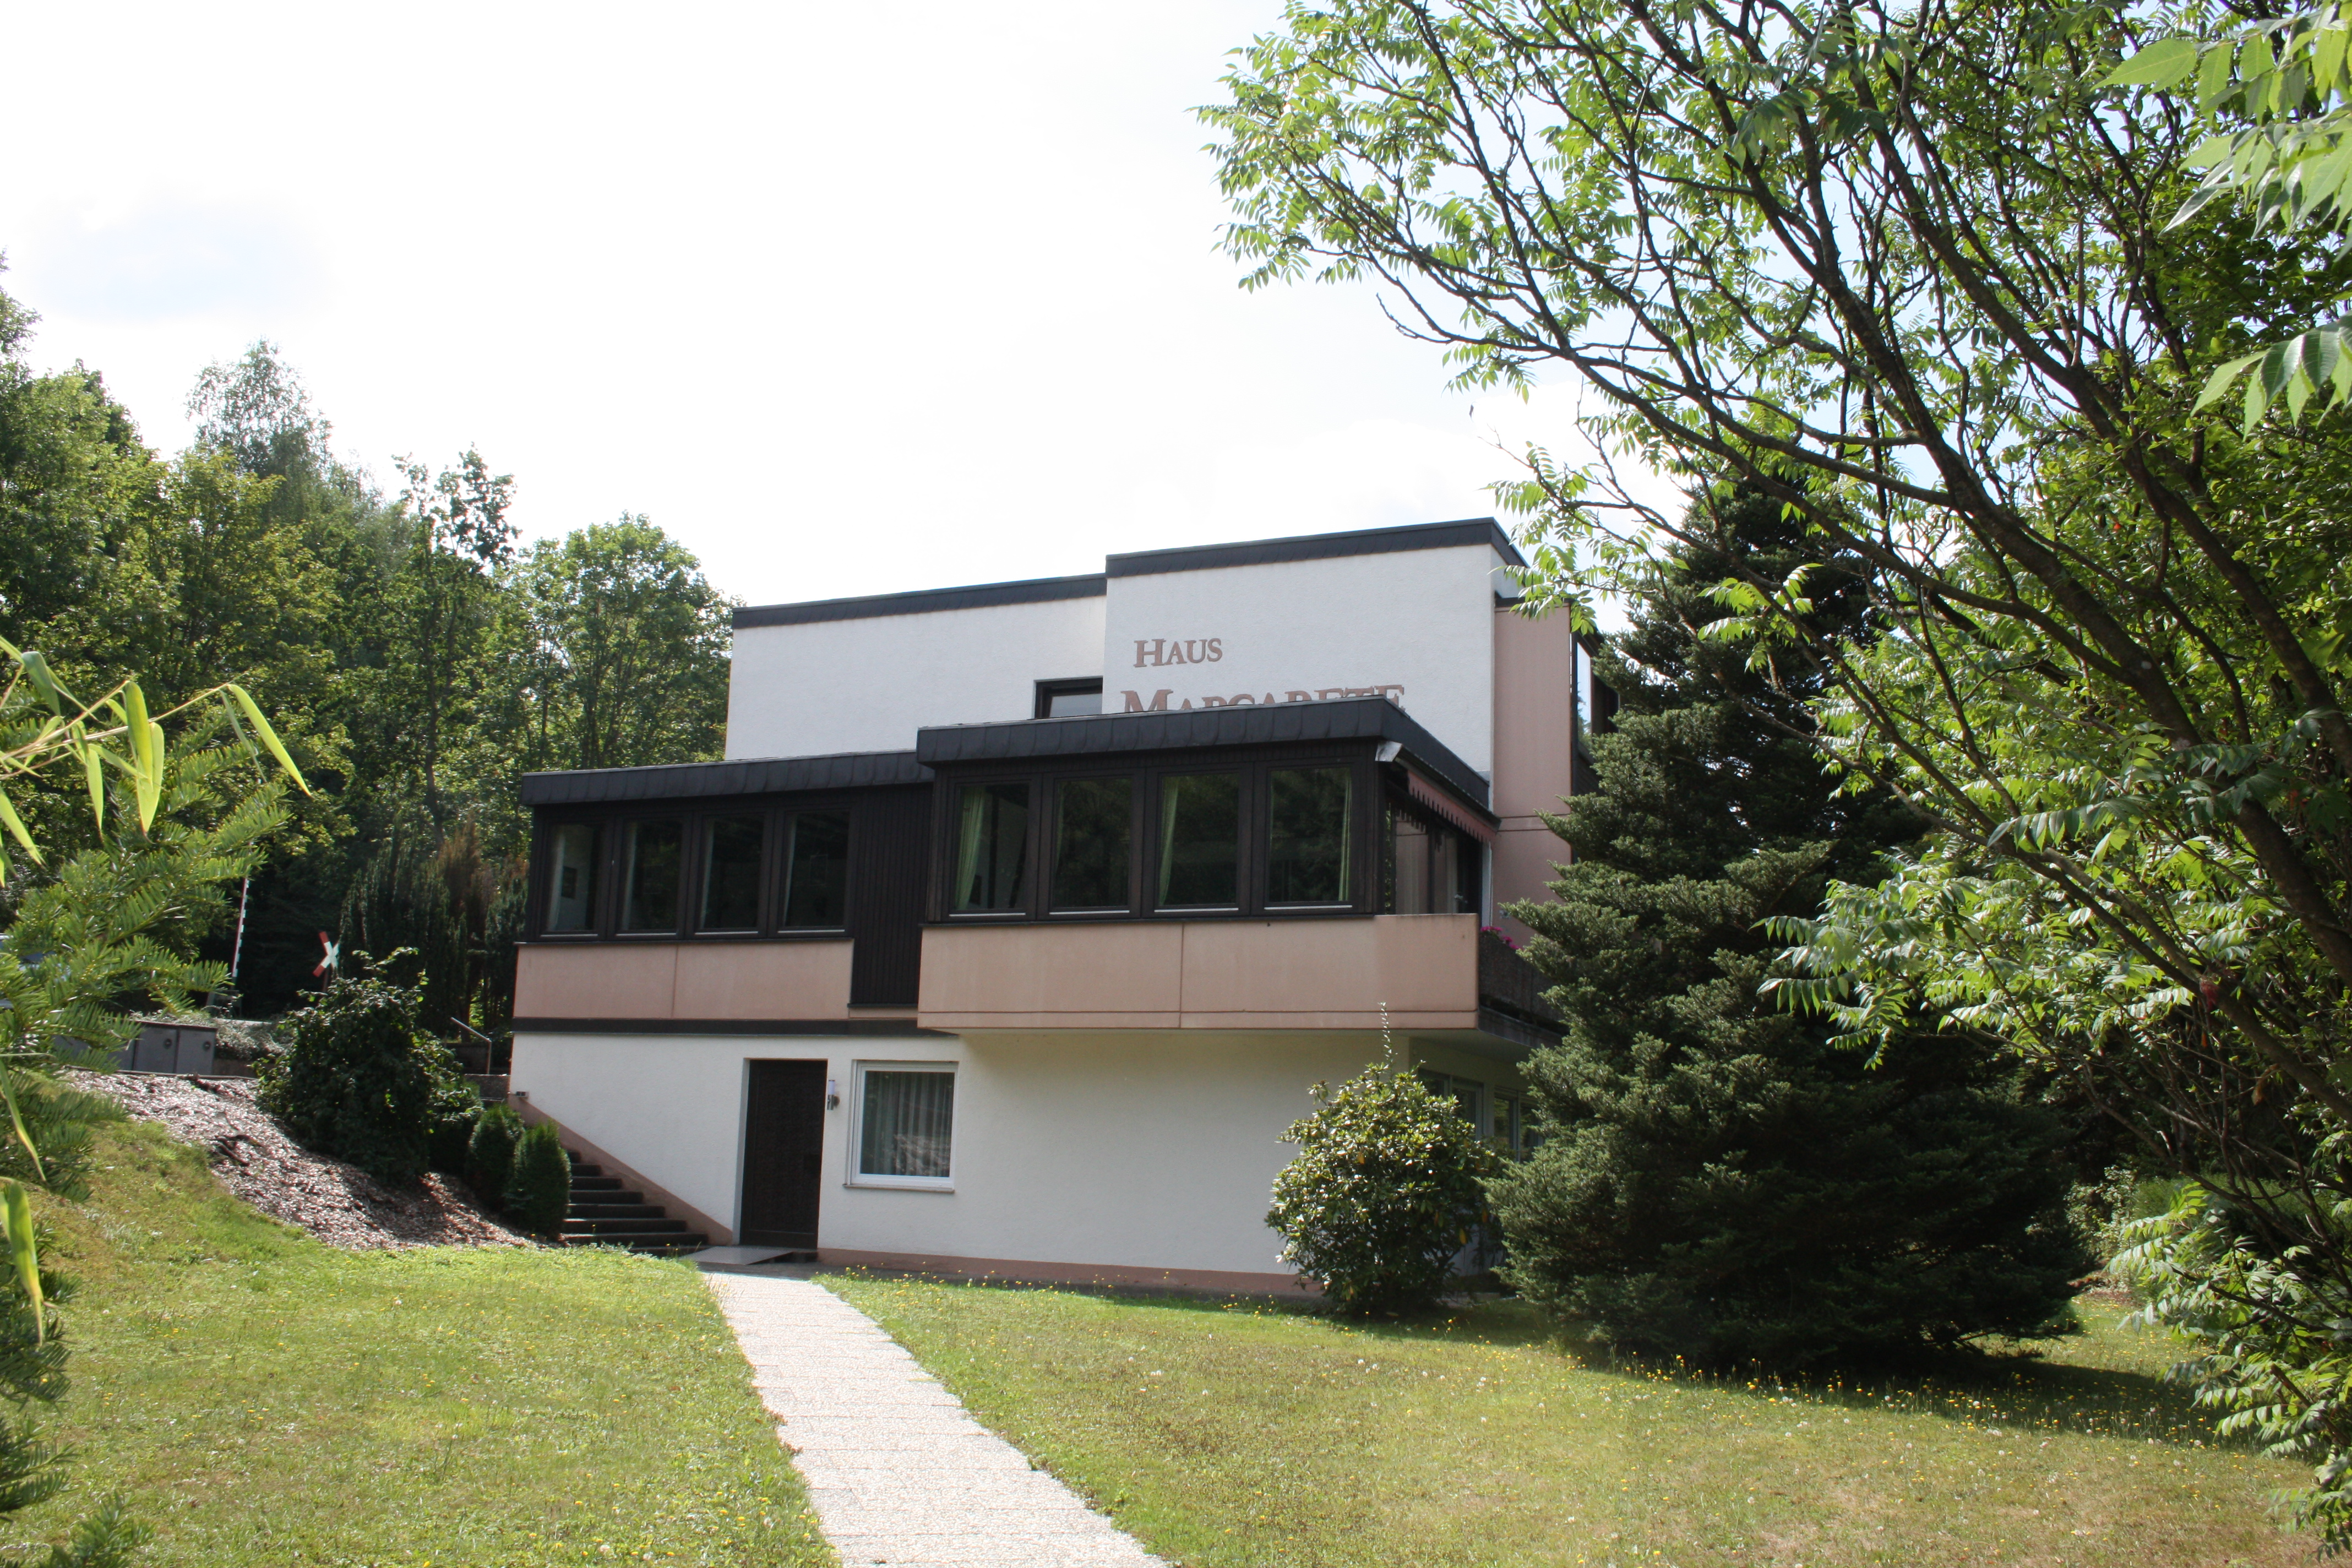 Pension Haus Margarete, Bad Brückenau.
